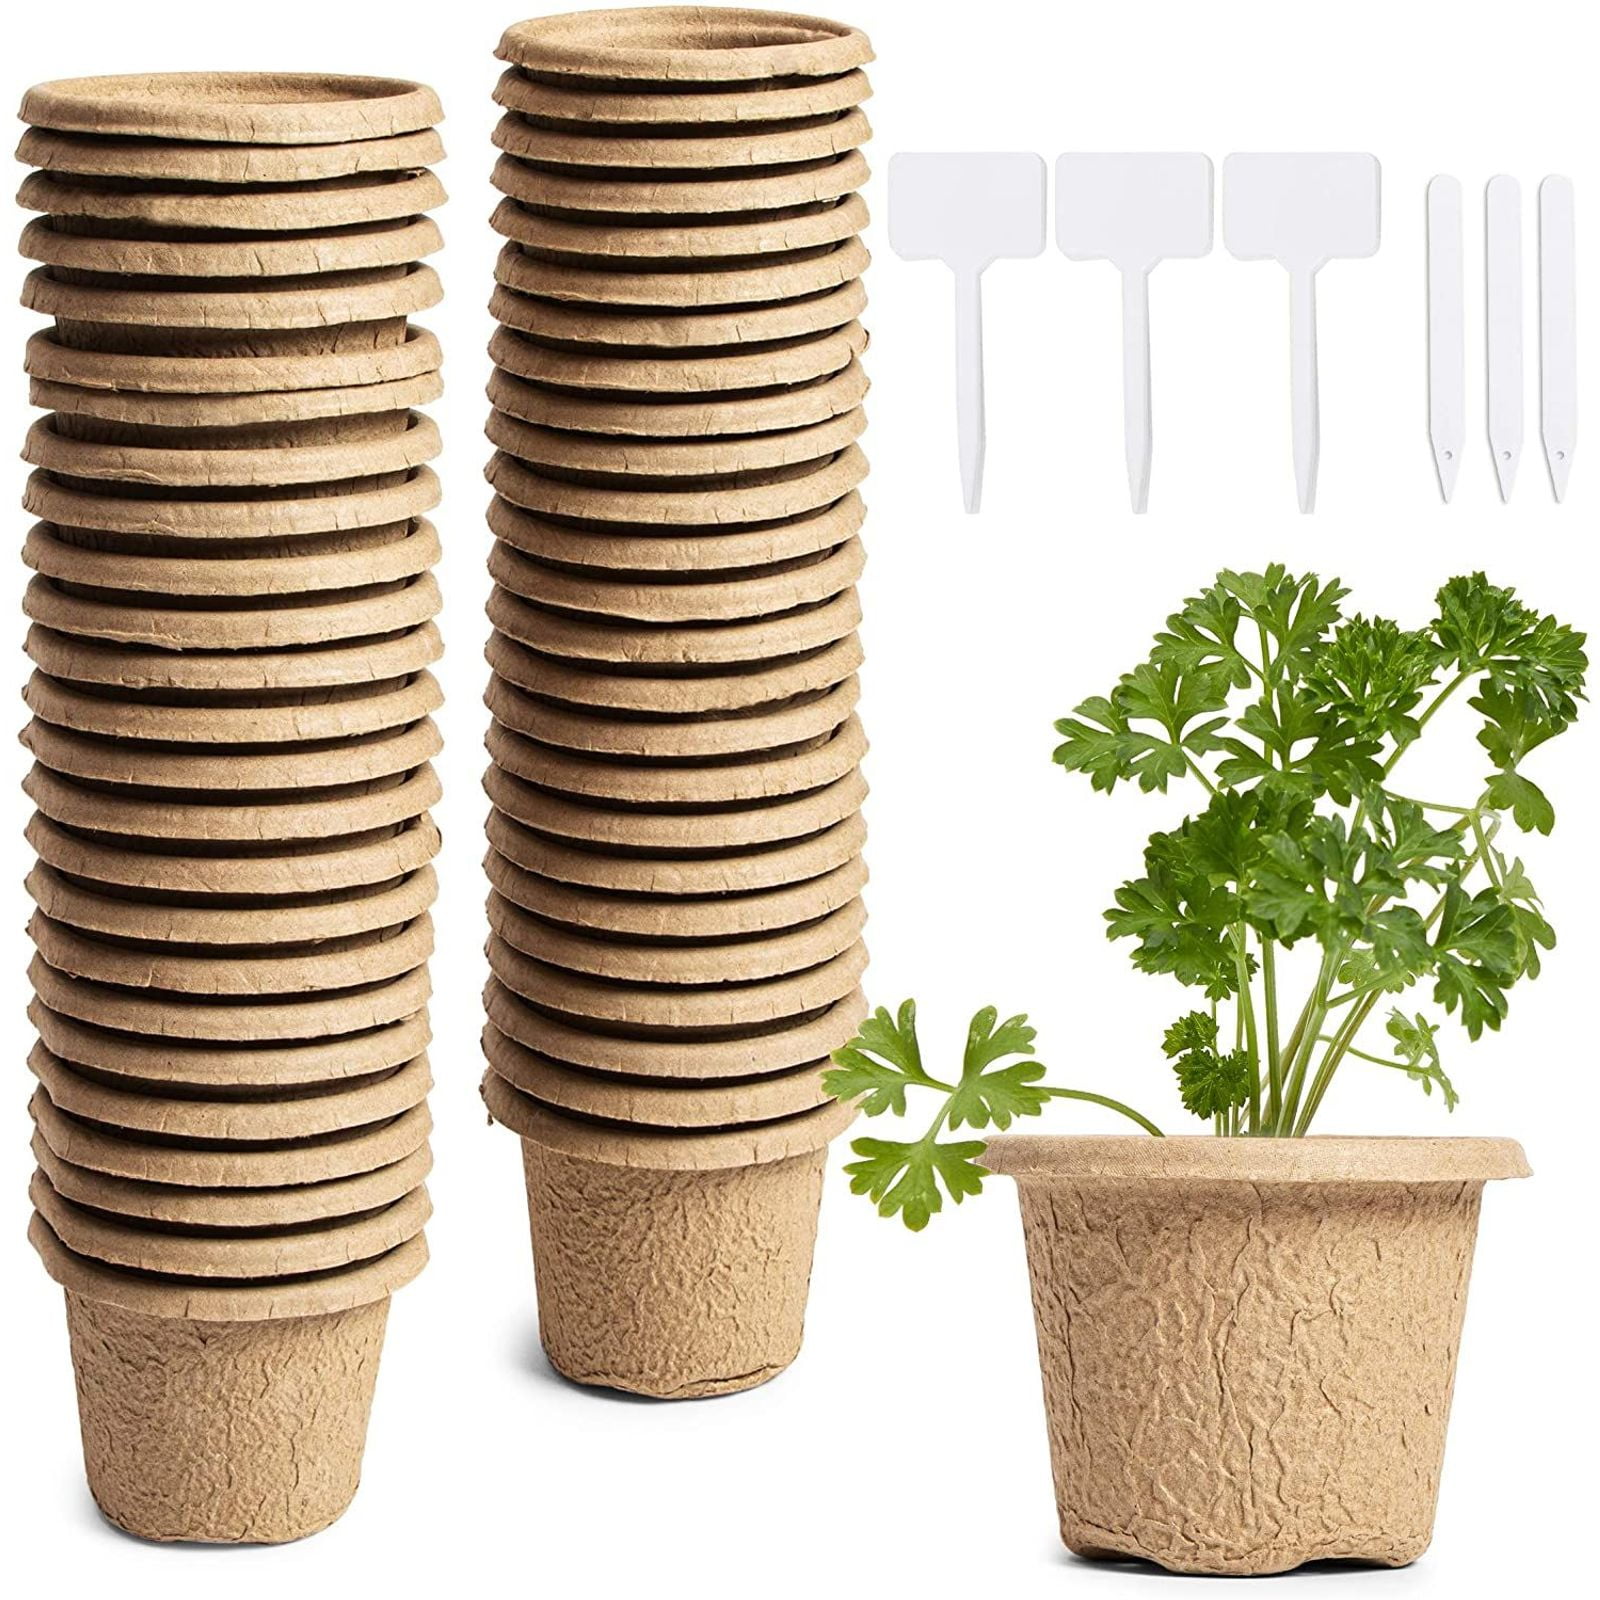 10/50pcs Hot Sell Planting Basket Nursery Sponge Flower Pots Seed Trays Durable